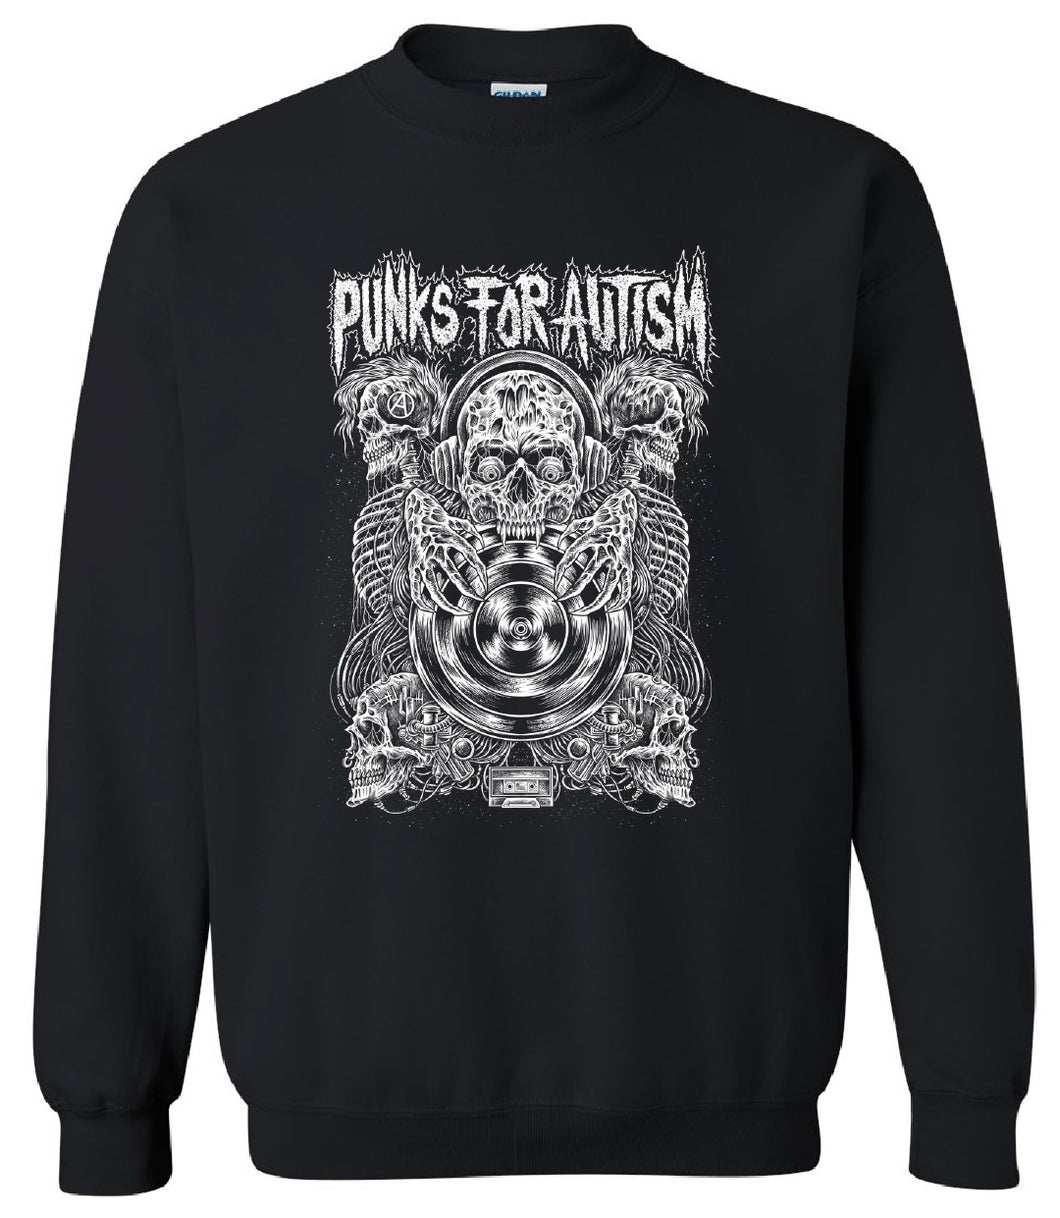 Punks for Autism - Break Beats - Sweatshirt